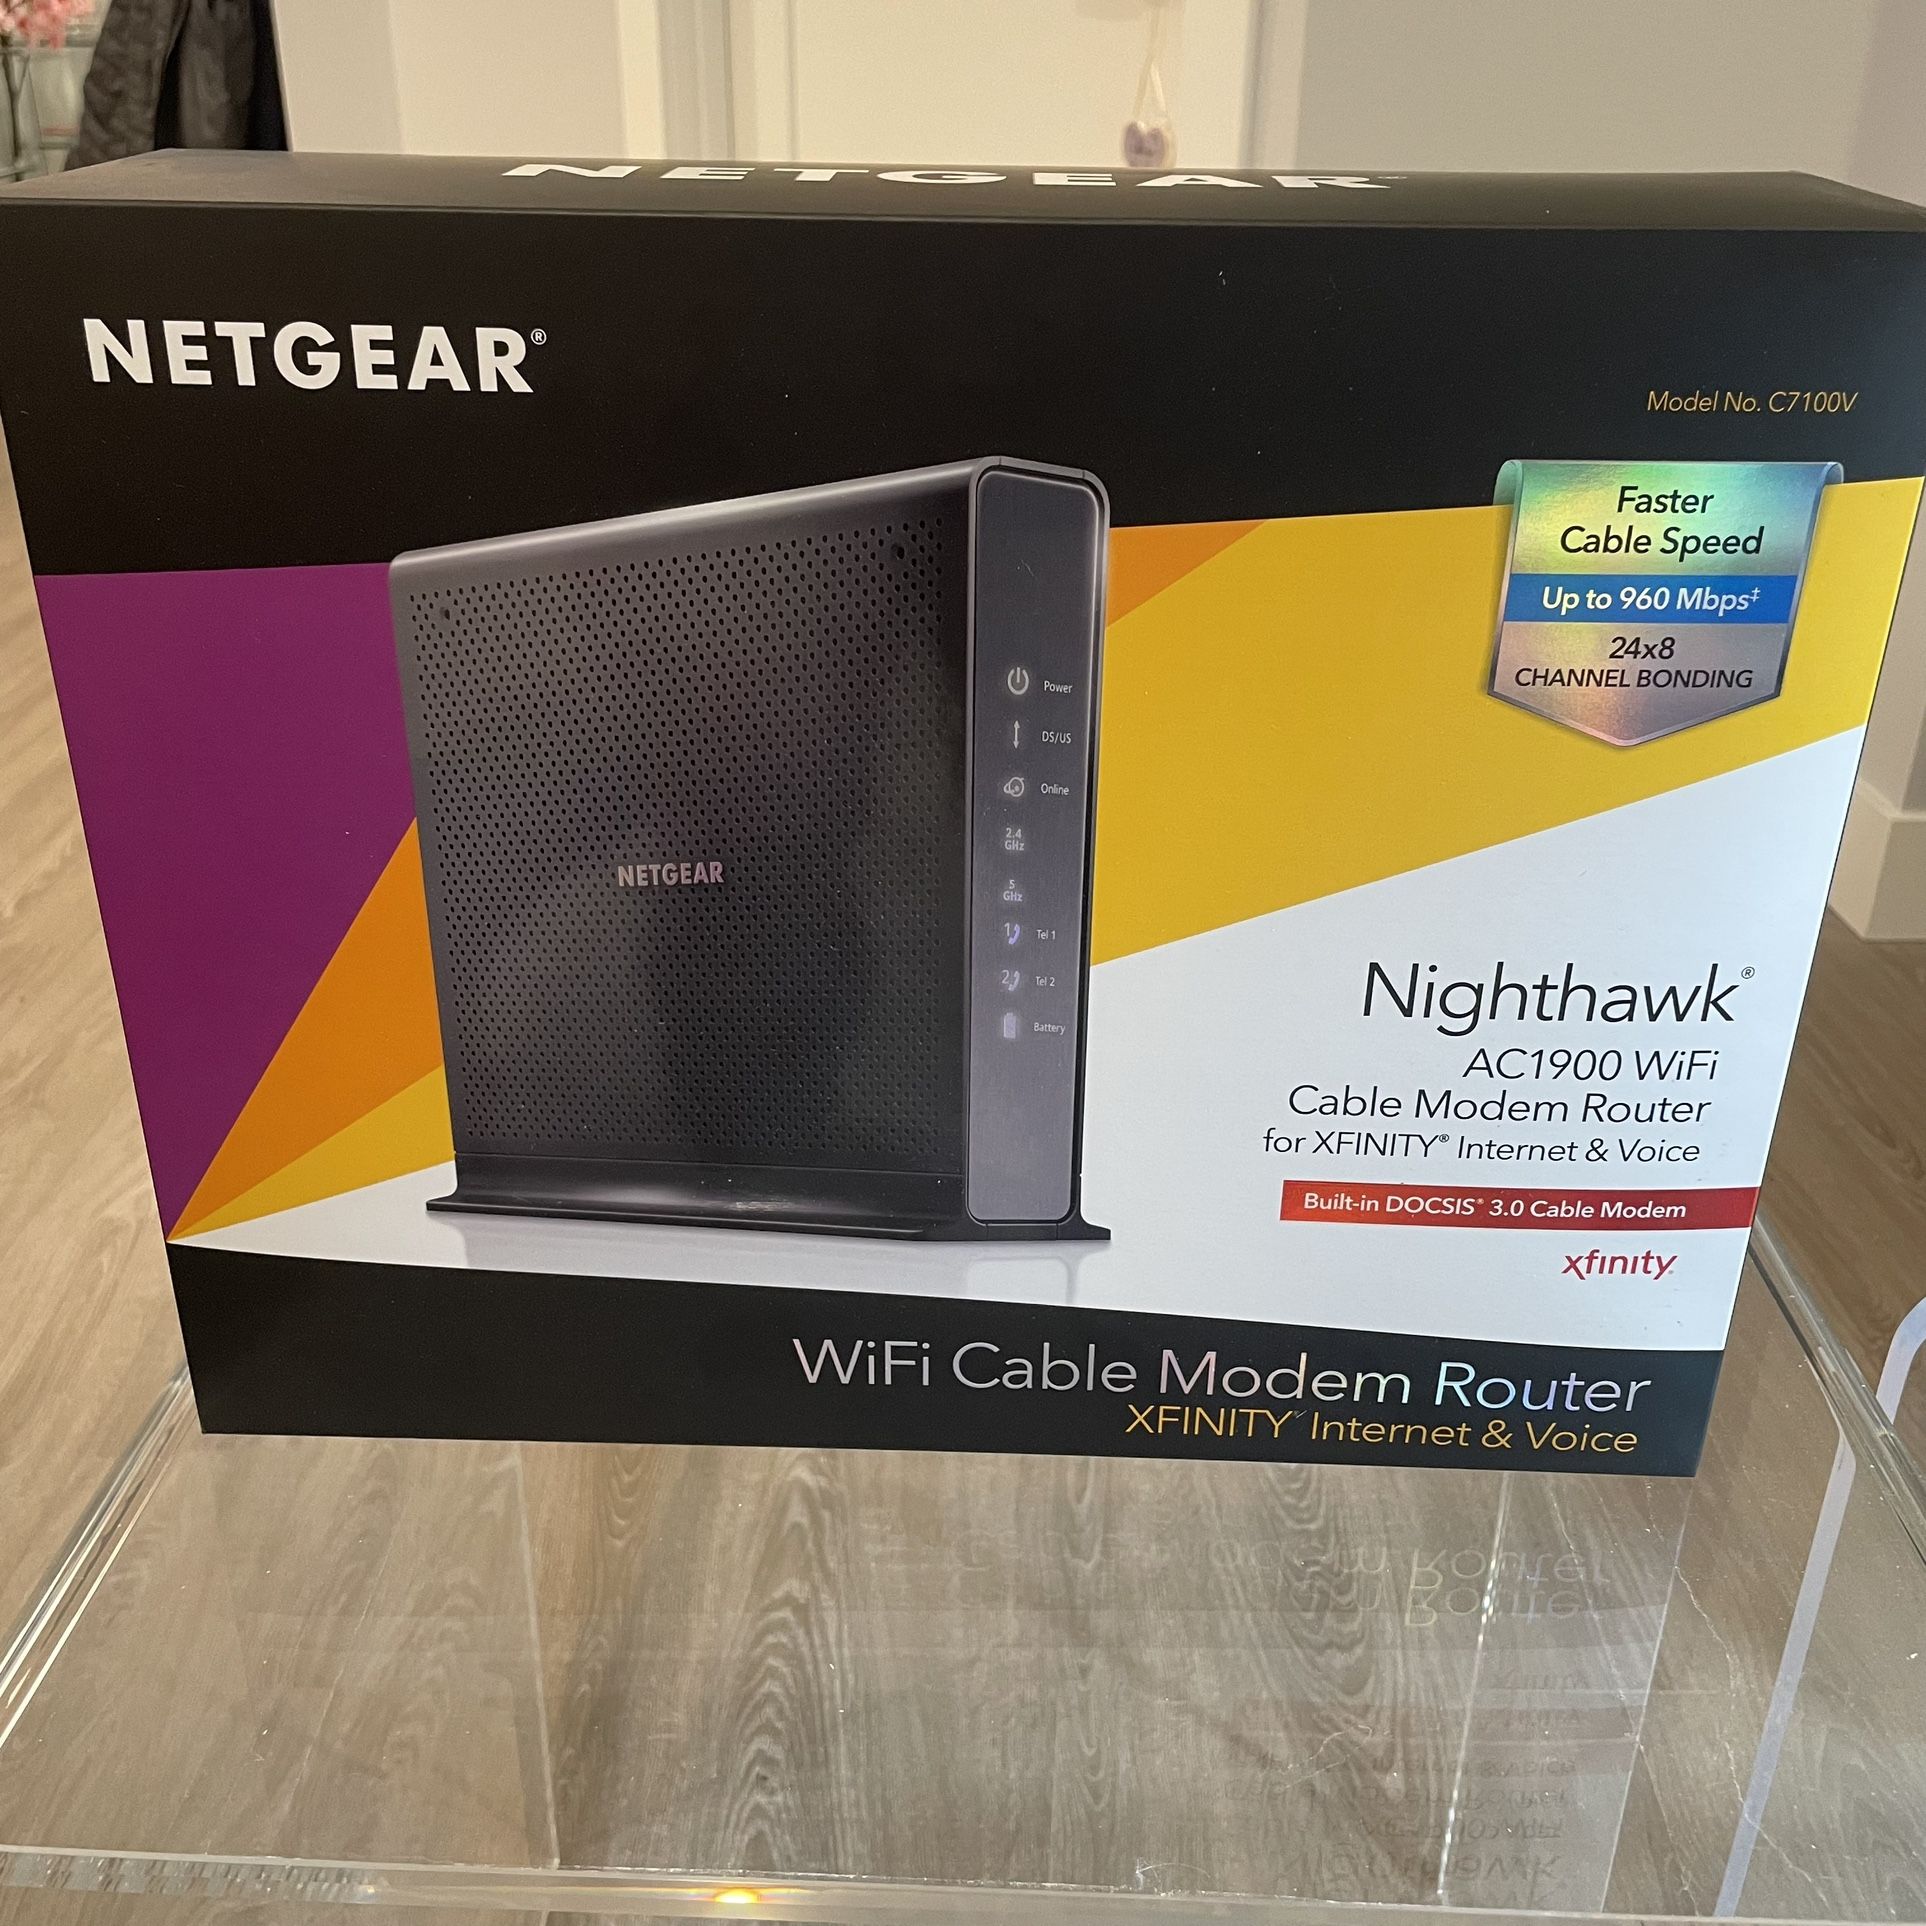 NETGEAR Nighthawk Modem Wi-Fi Router Combo C7100V